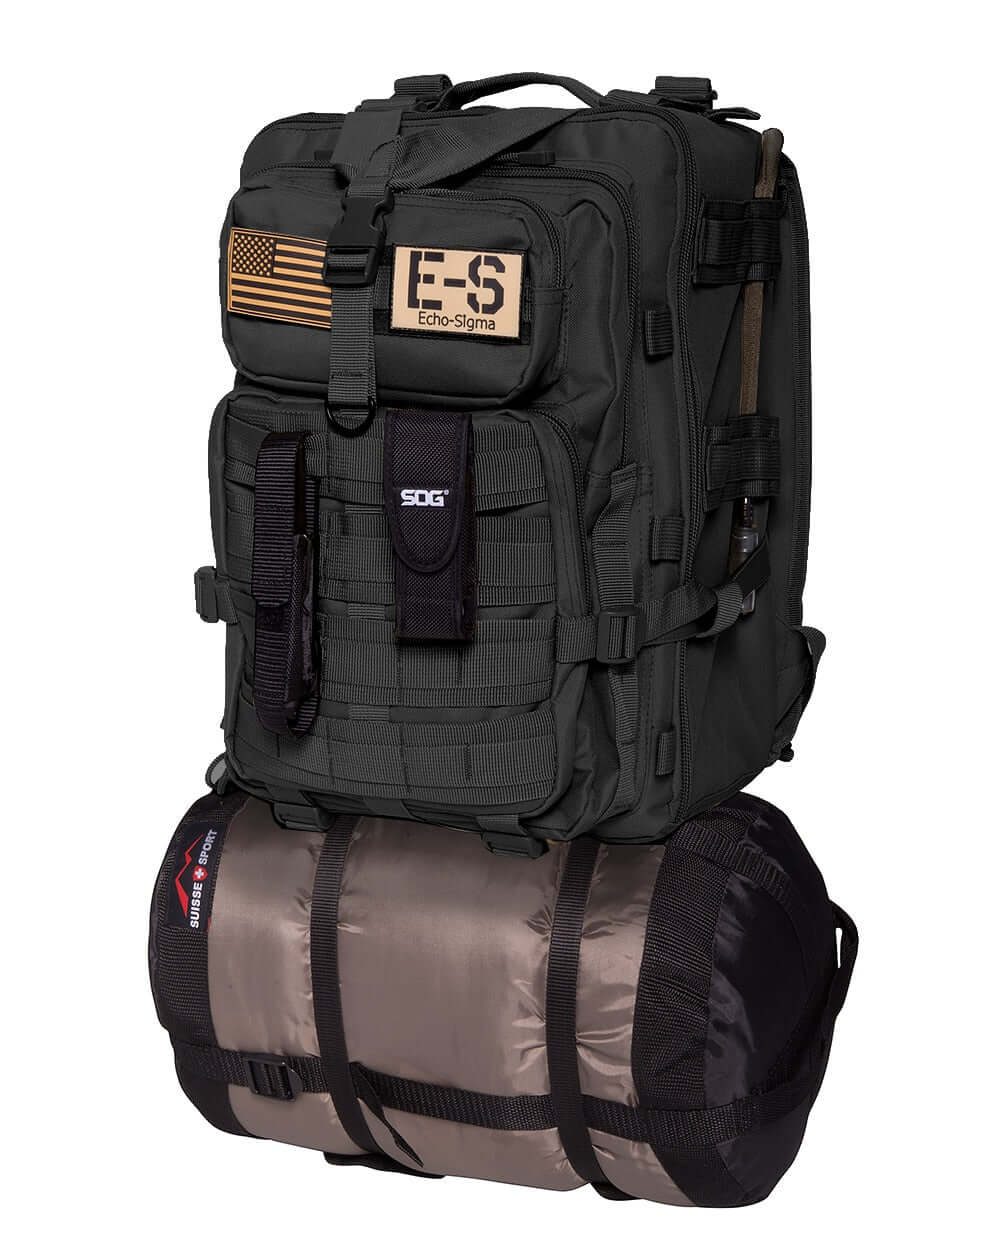 SPUNKER Survival Gear - 15 in 1 Emergency Backpack Survival Kit